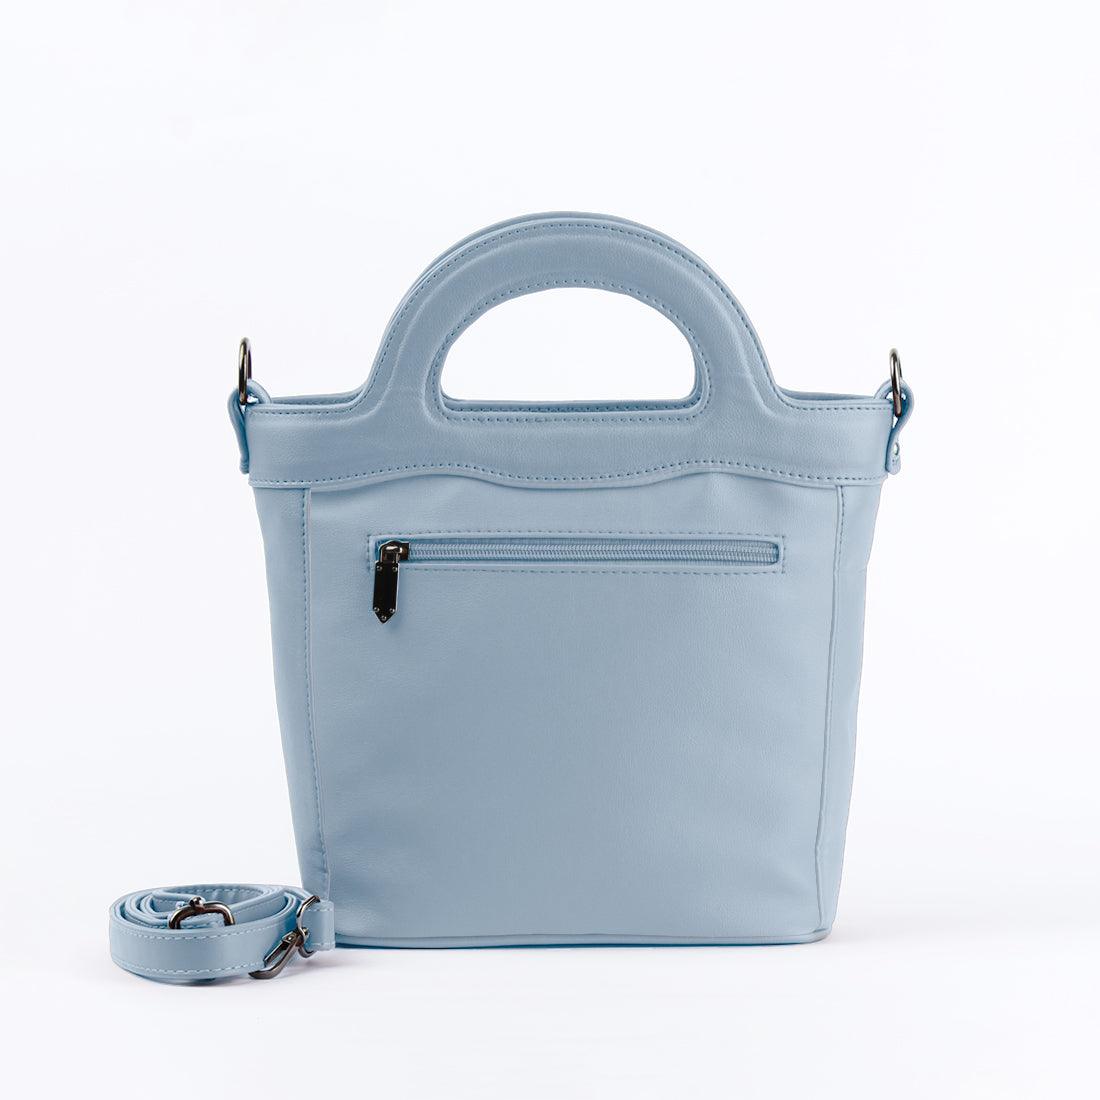 Blue Top Handle Handbag Floral - CANVAEGYPT